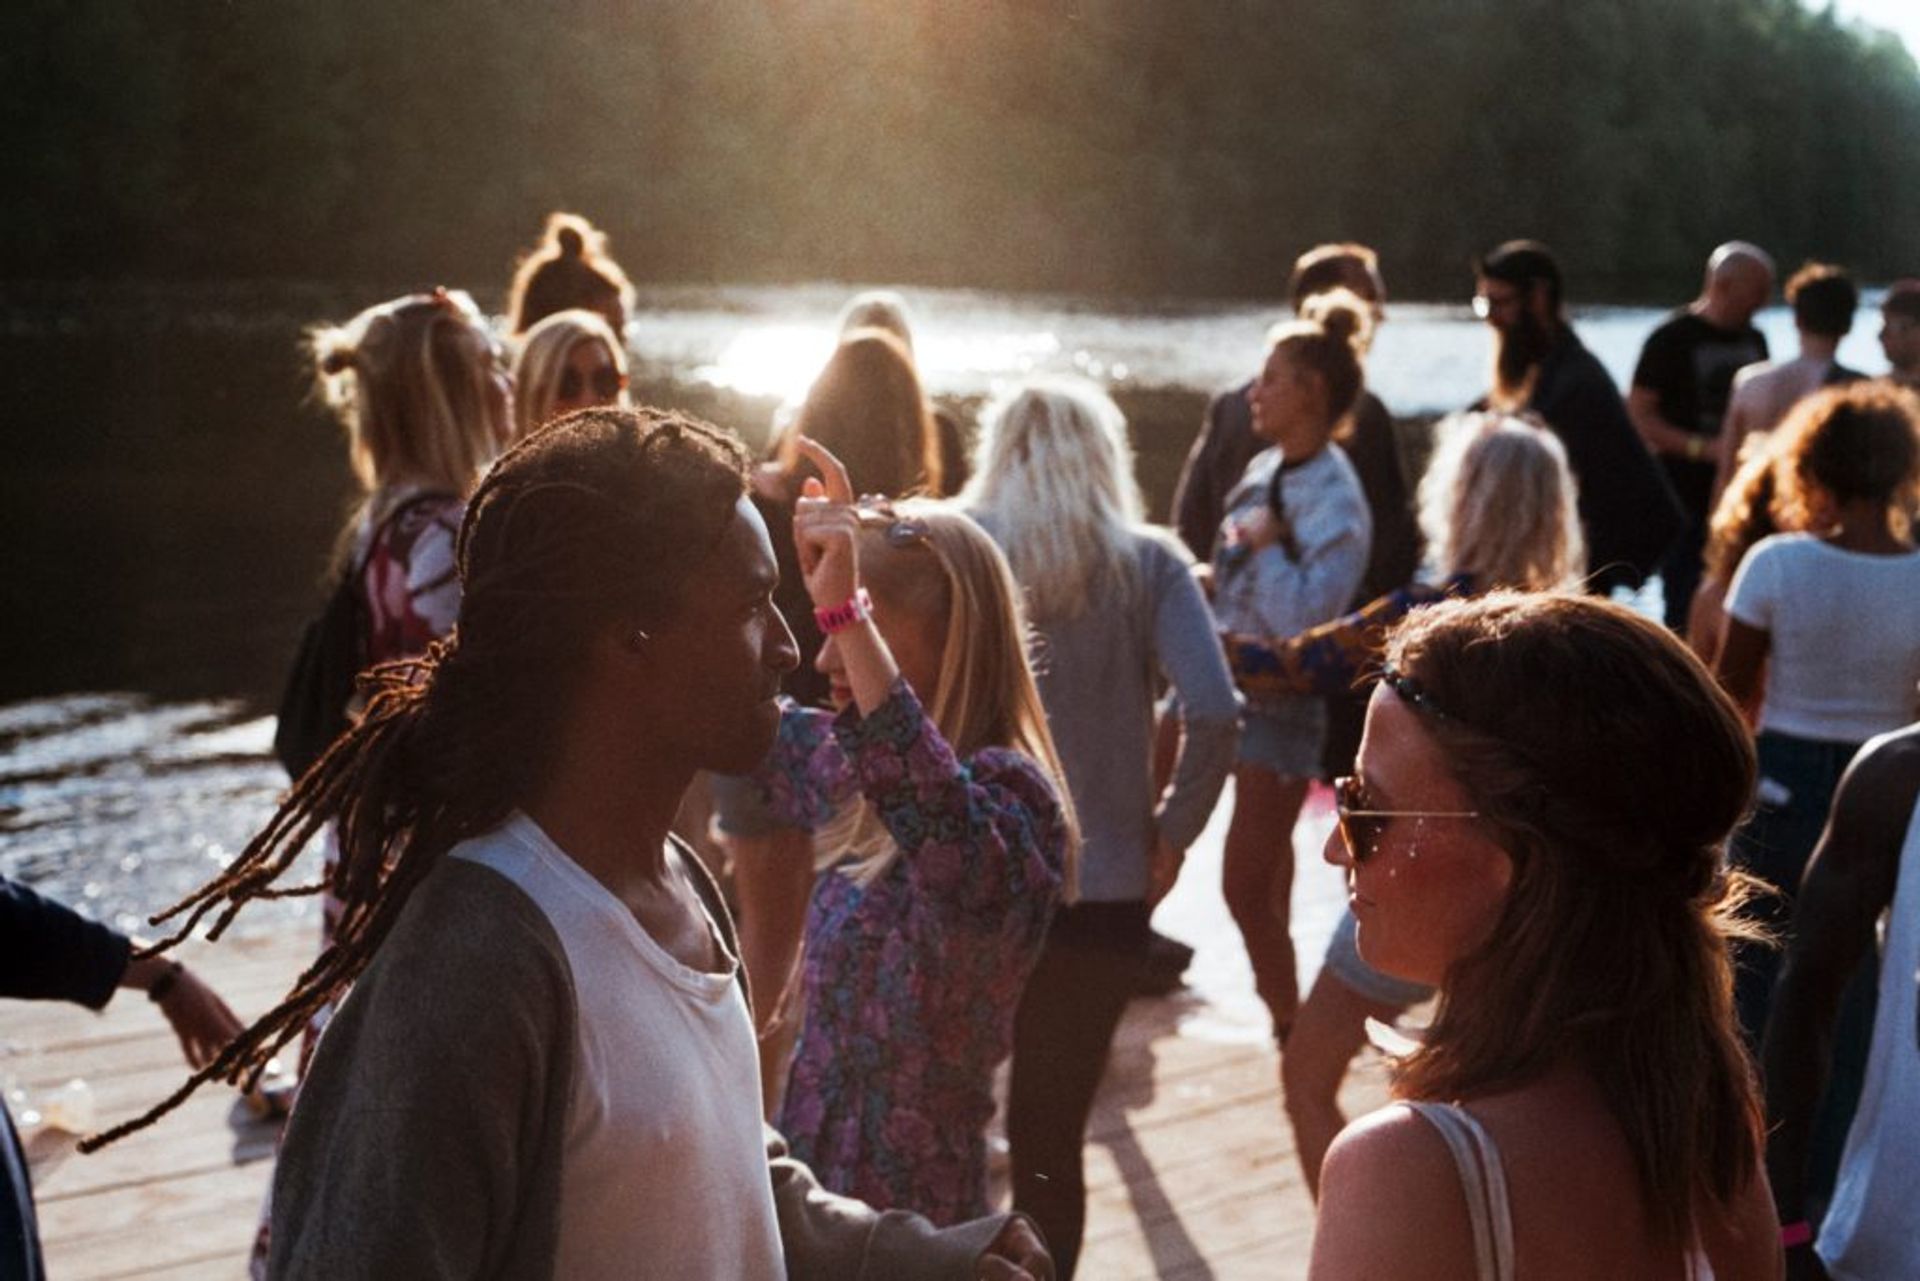 People mingling, Source: Jens Johnsson, Unsplash